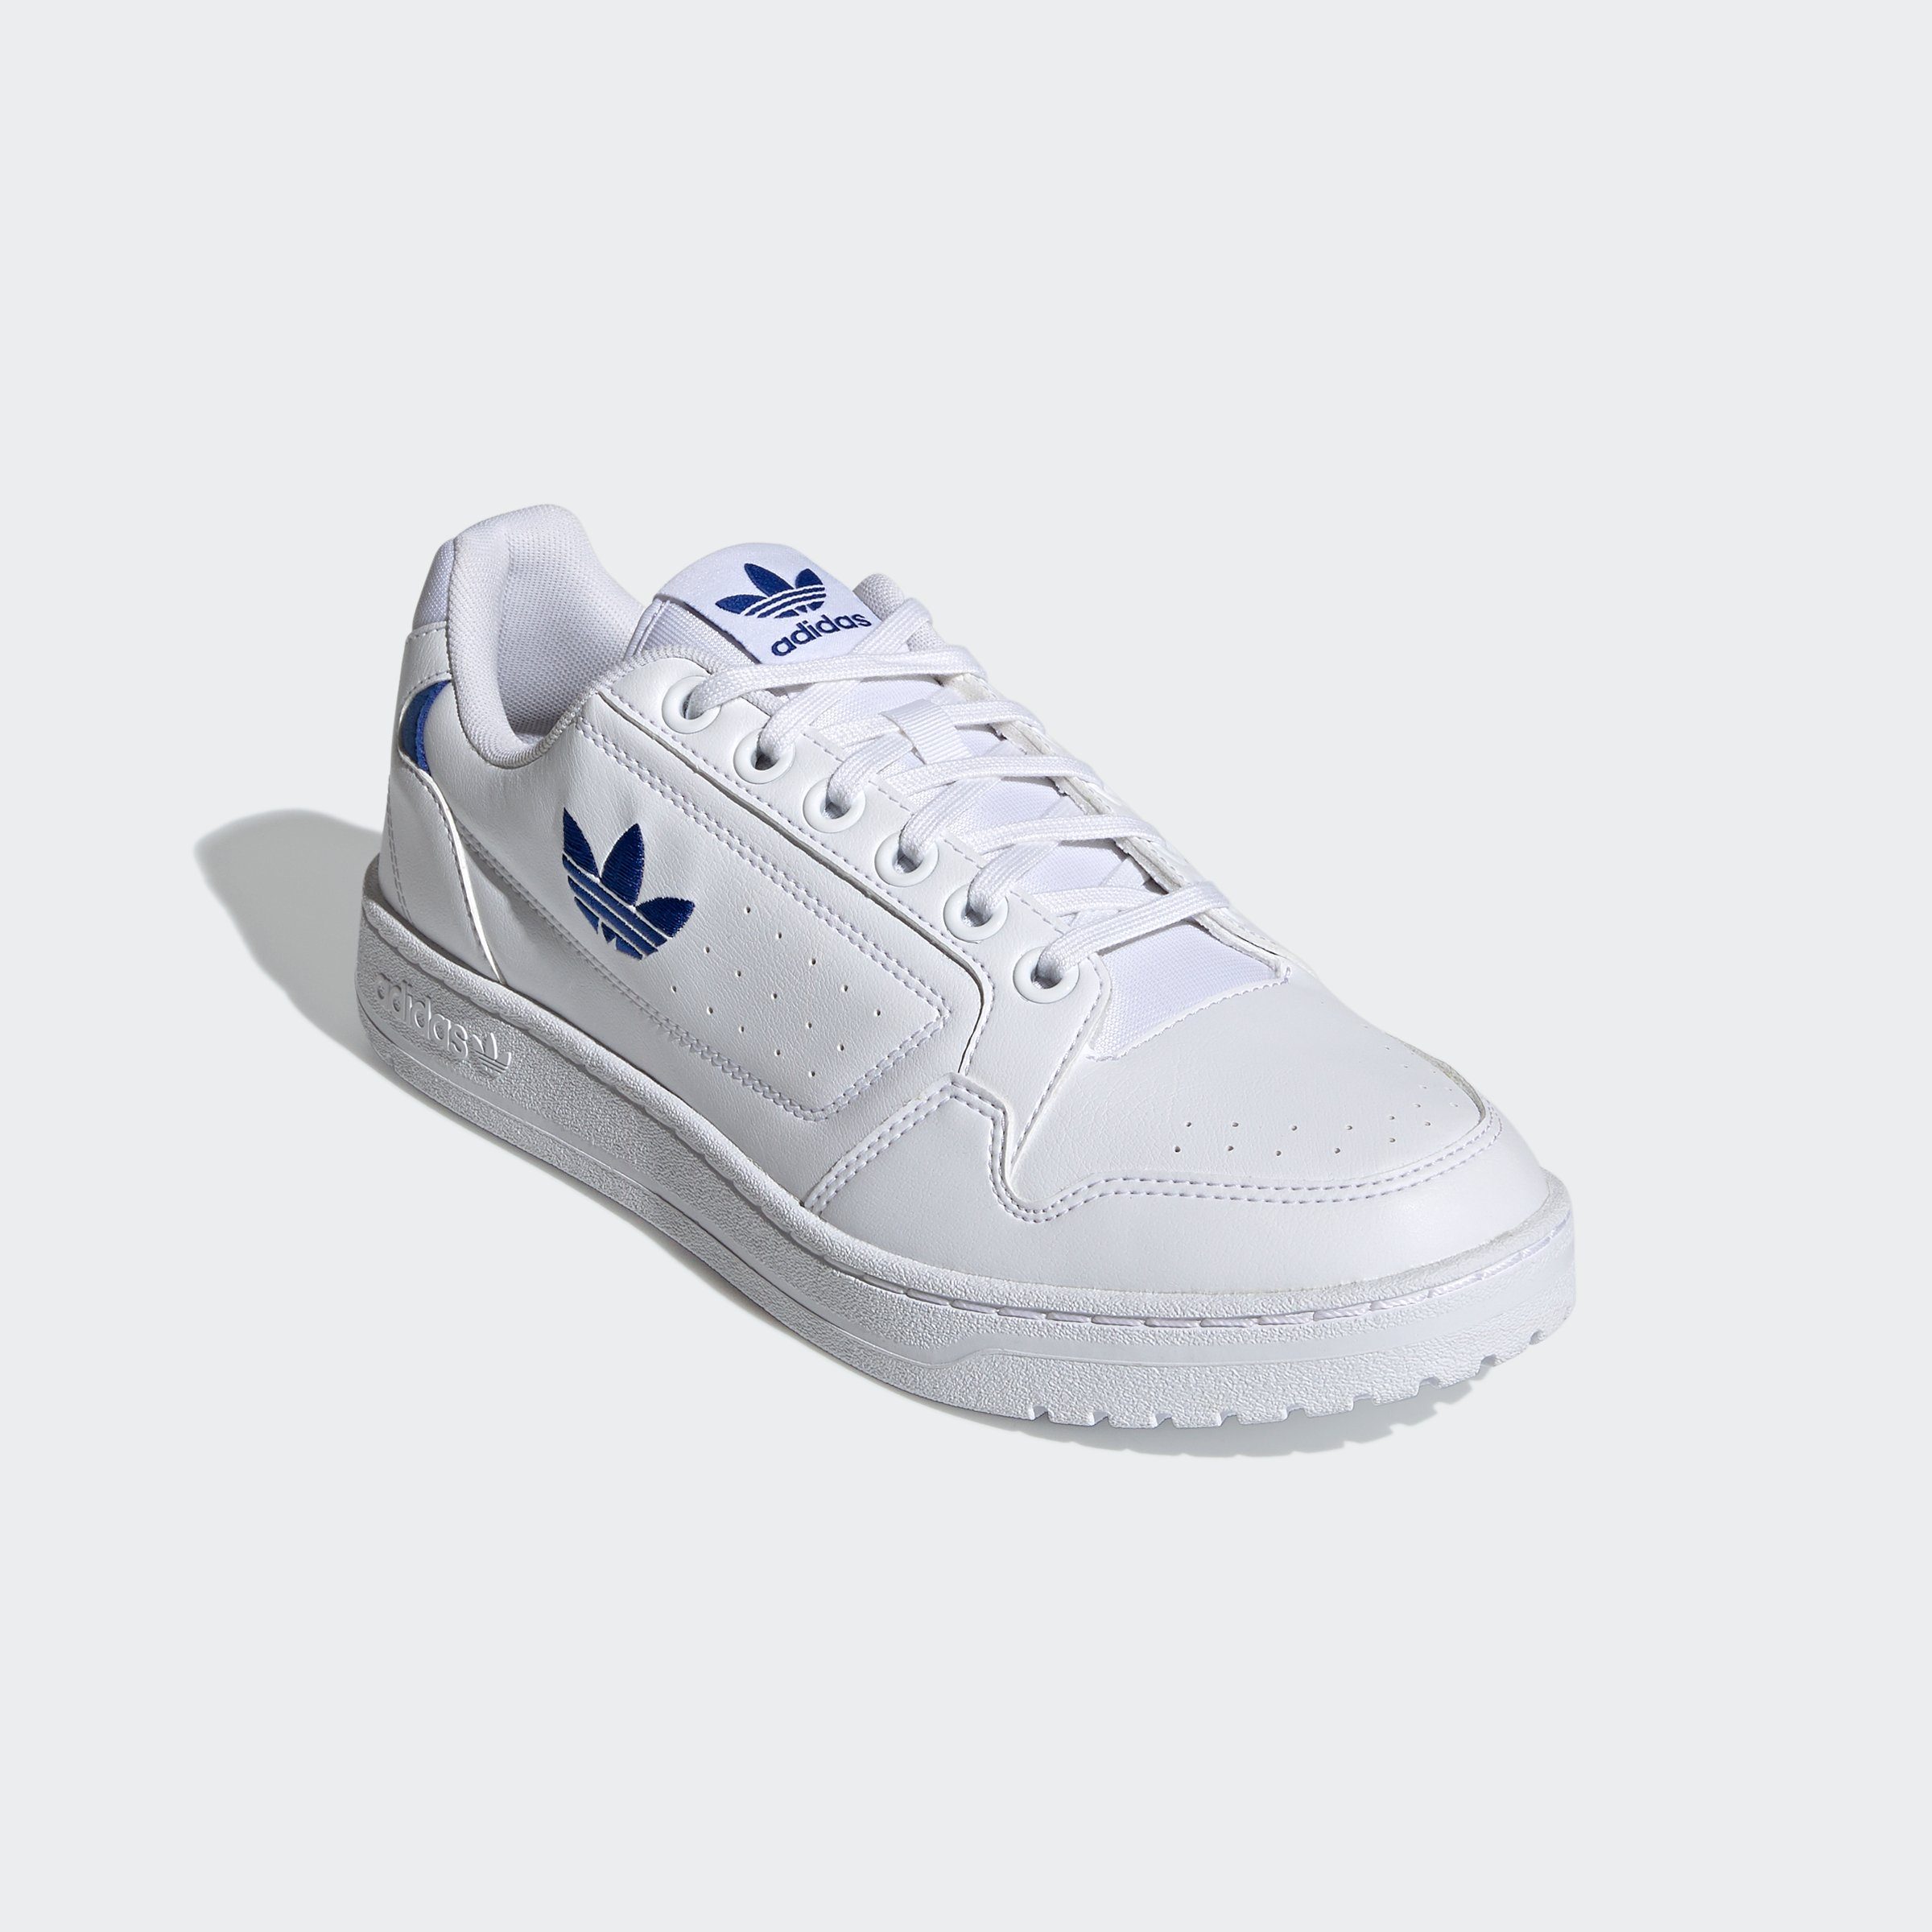 adidas Originals NY 90 Sneaker